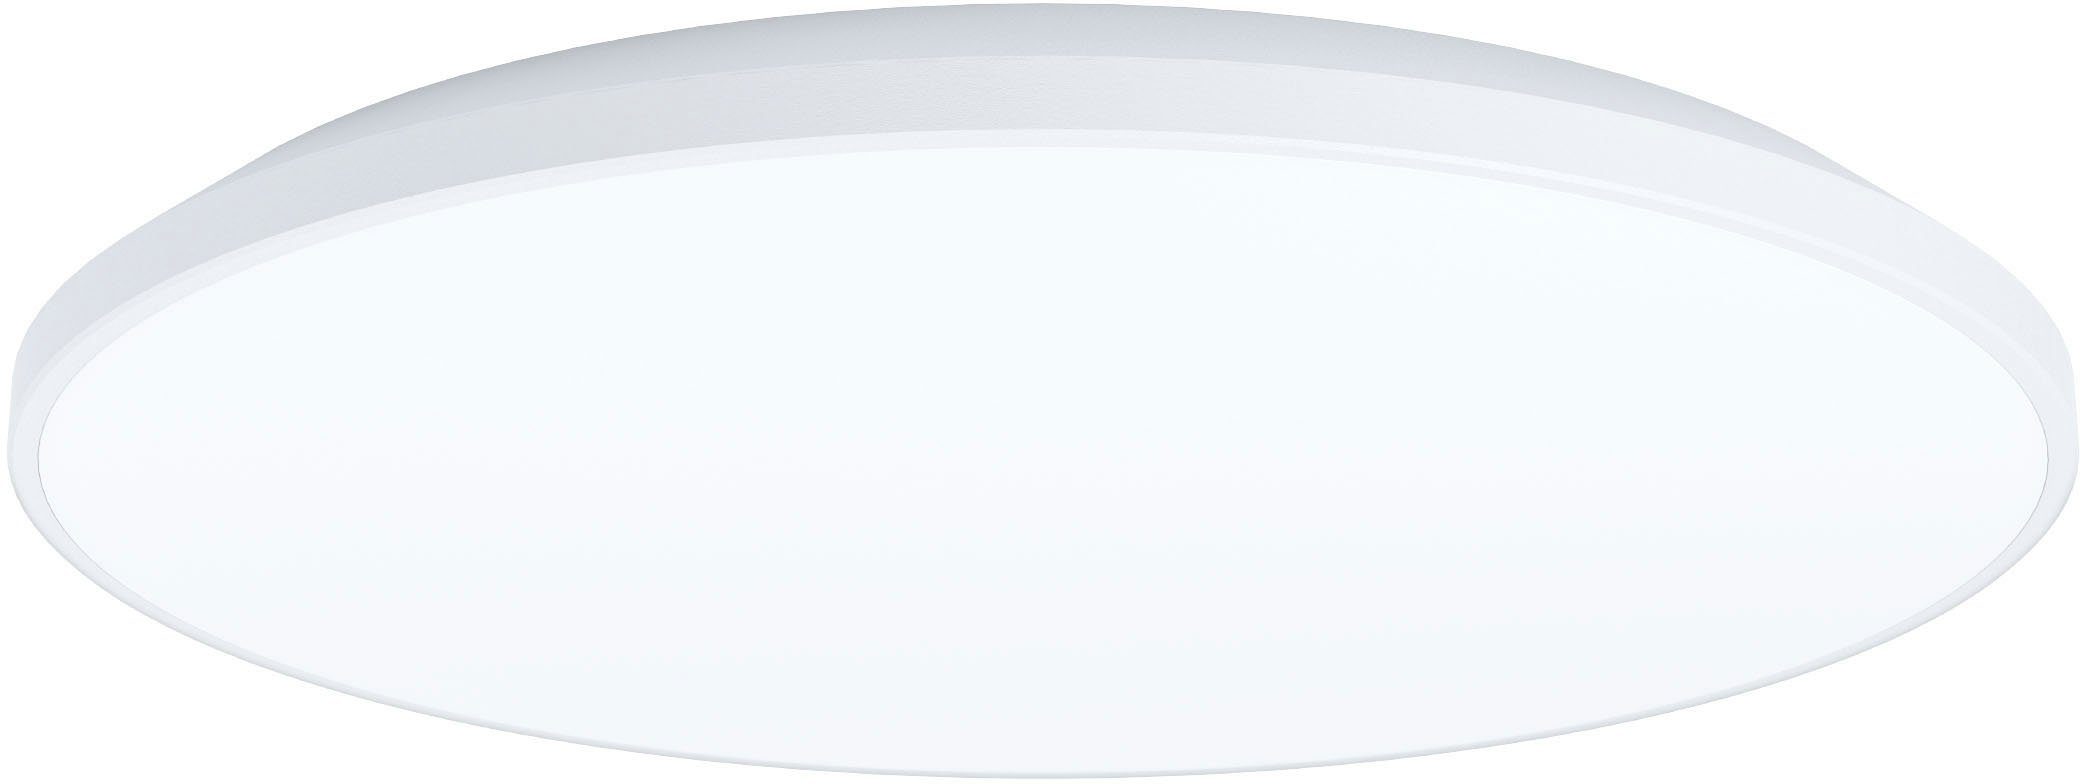 EGLO Deckenleuchte CRESPILLO, LED fest integriert, Neutralweiß, Deckenlampe, Küchenlampe, Bürolampe, LED Aufbaulampe, Lampe, Ø 38 cm